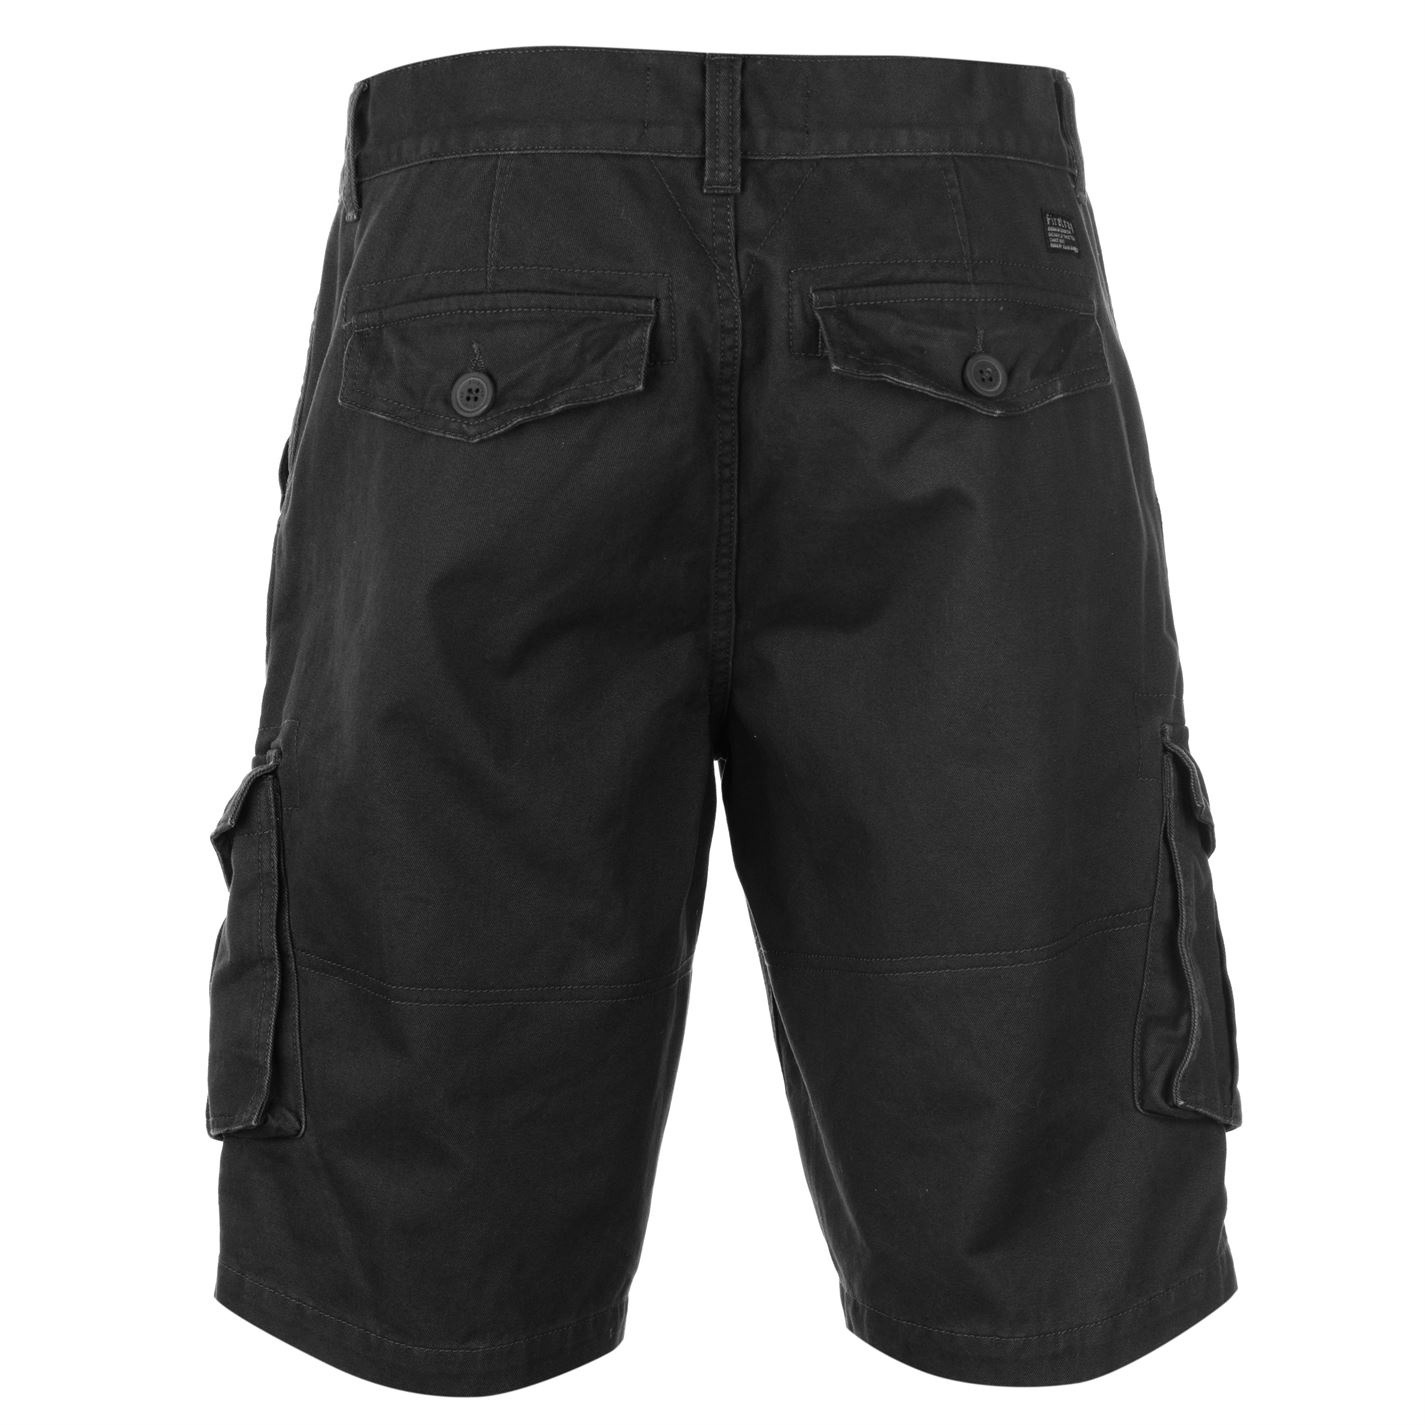 Mens Firetrap Below The Knee Shorts Cargo Cotton New | eBay